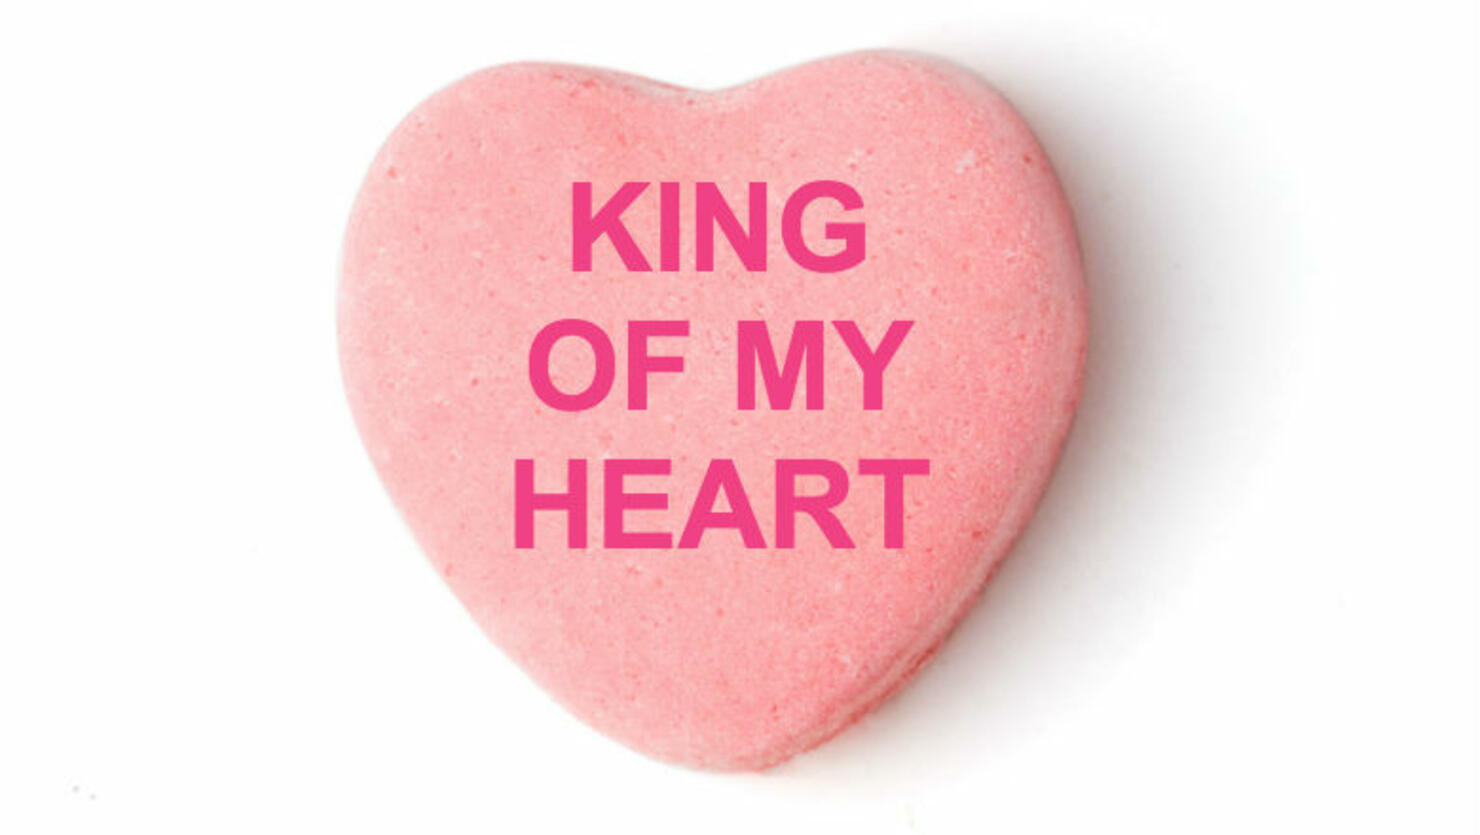 Taylor Swift - "King of my Heart"